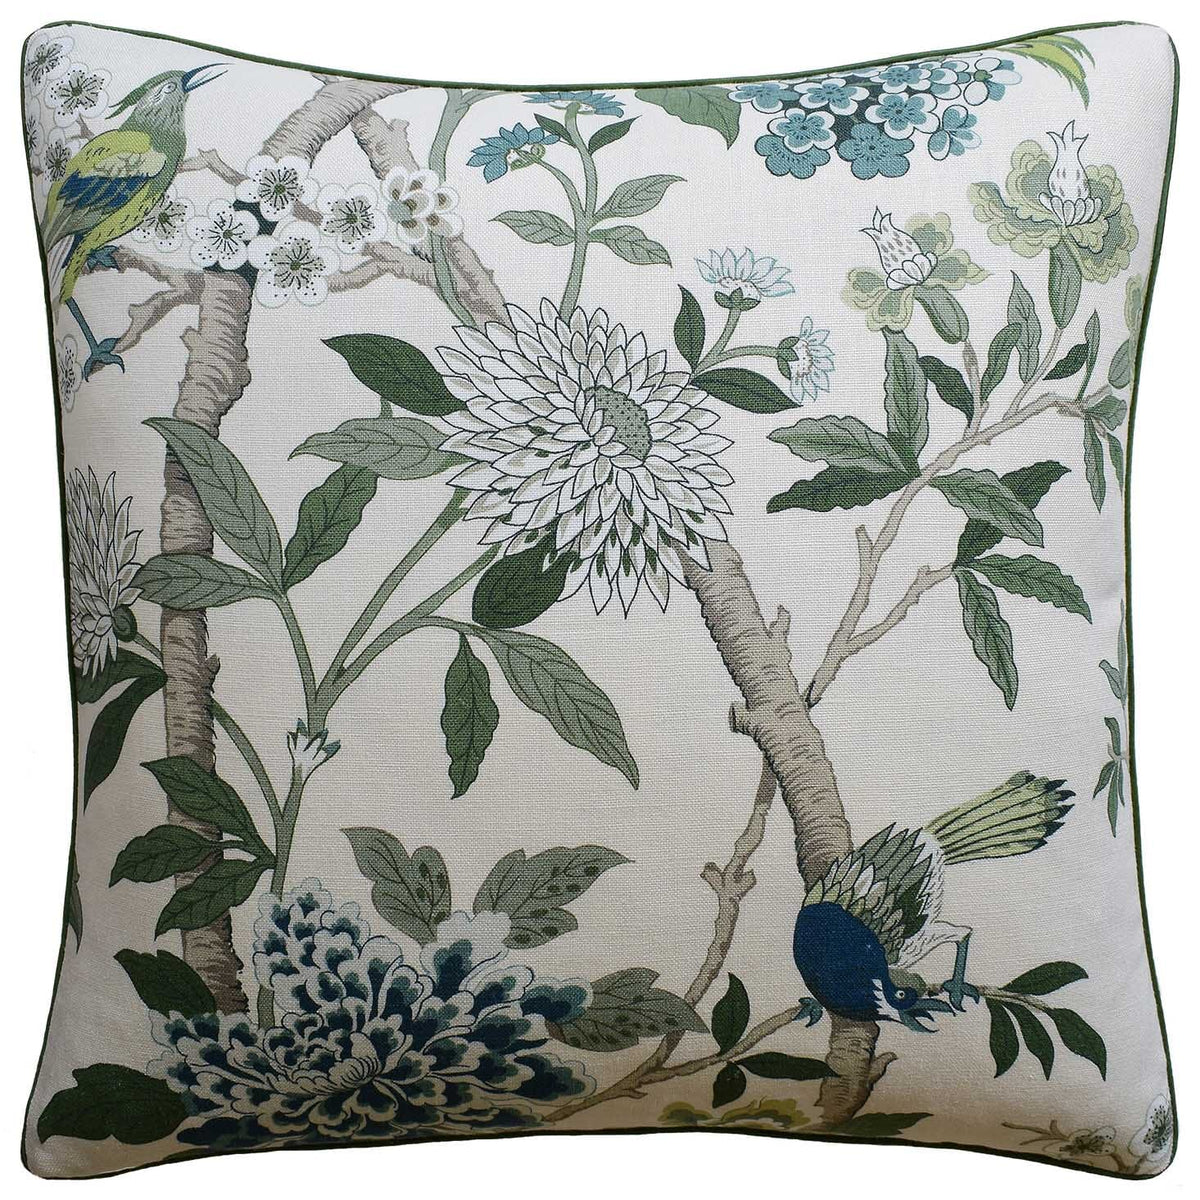 Hydrangea Bird Green - Throw Pillow by Ryan Studio - GP and J Baker Fabric